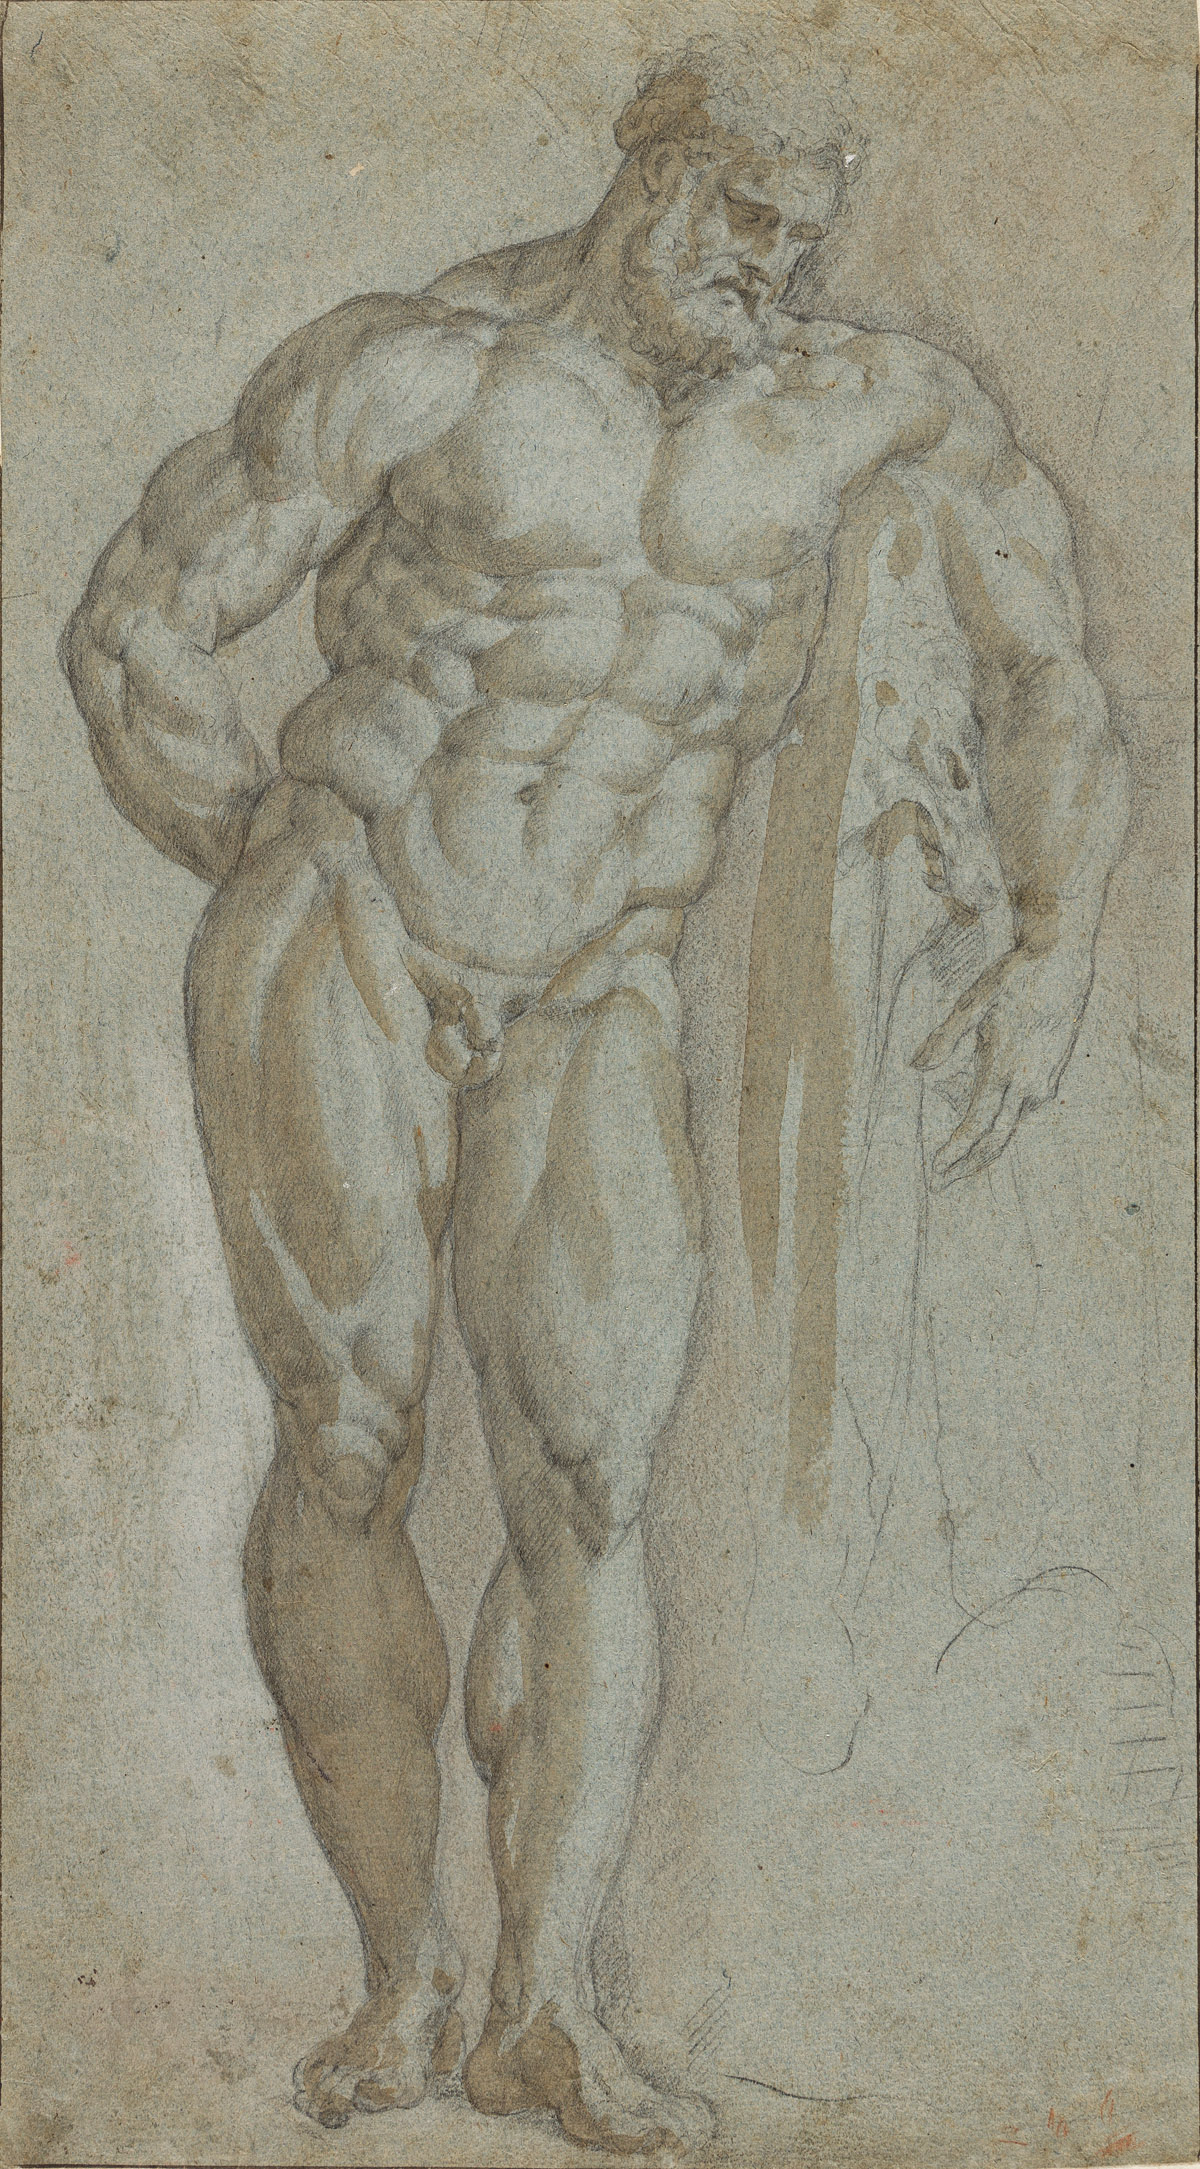 GIORGIO GHISI (FOLLOWER OF) (Mantua 1520-1582 Mantua) The Farnese Hercules.